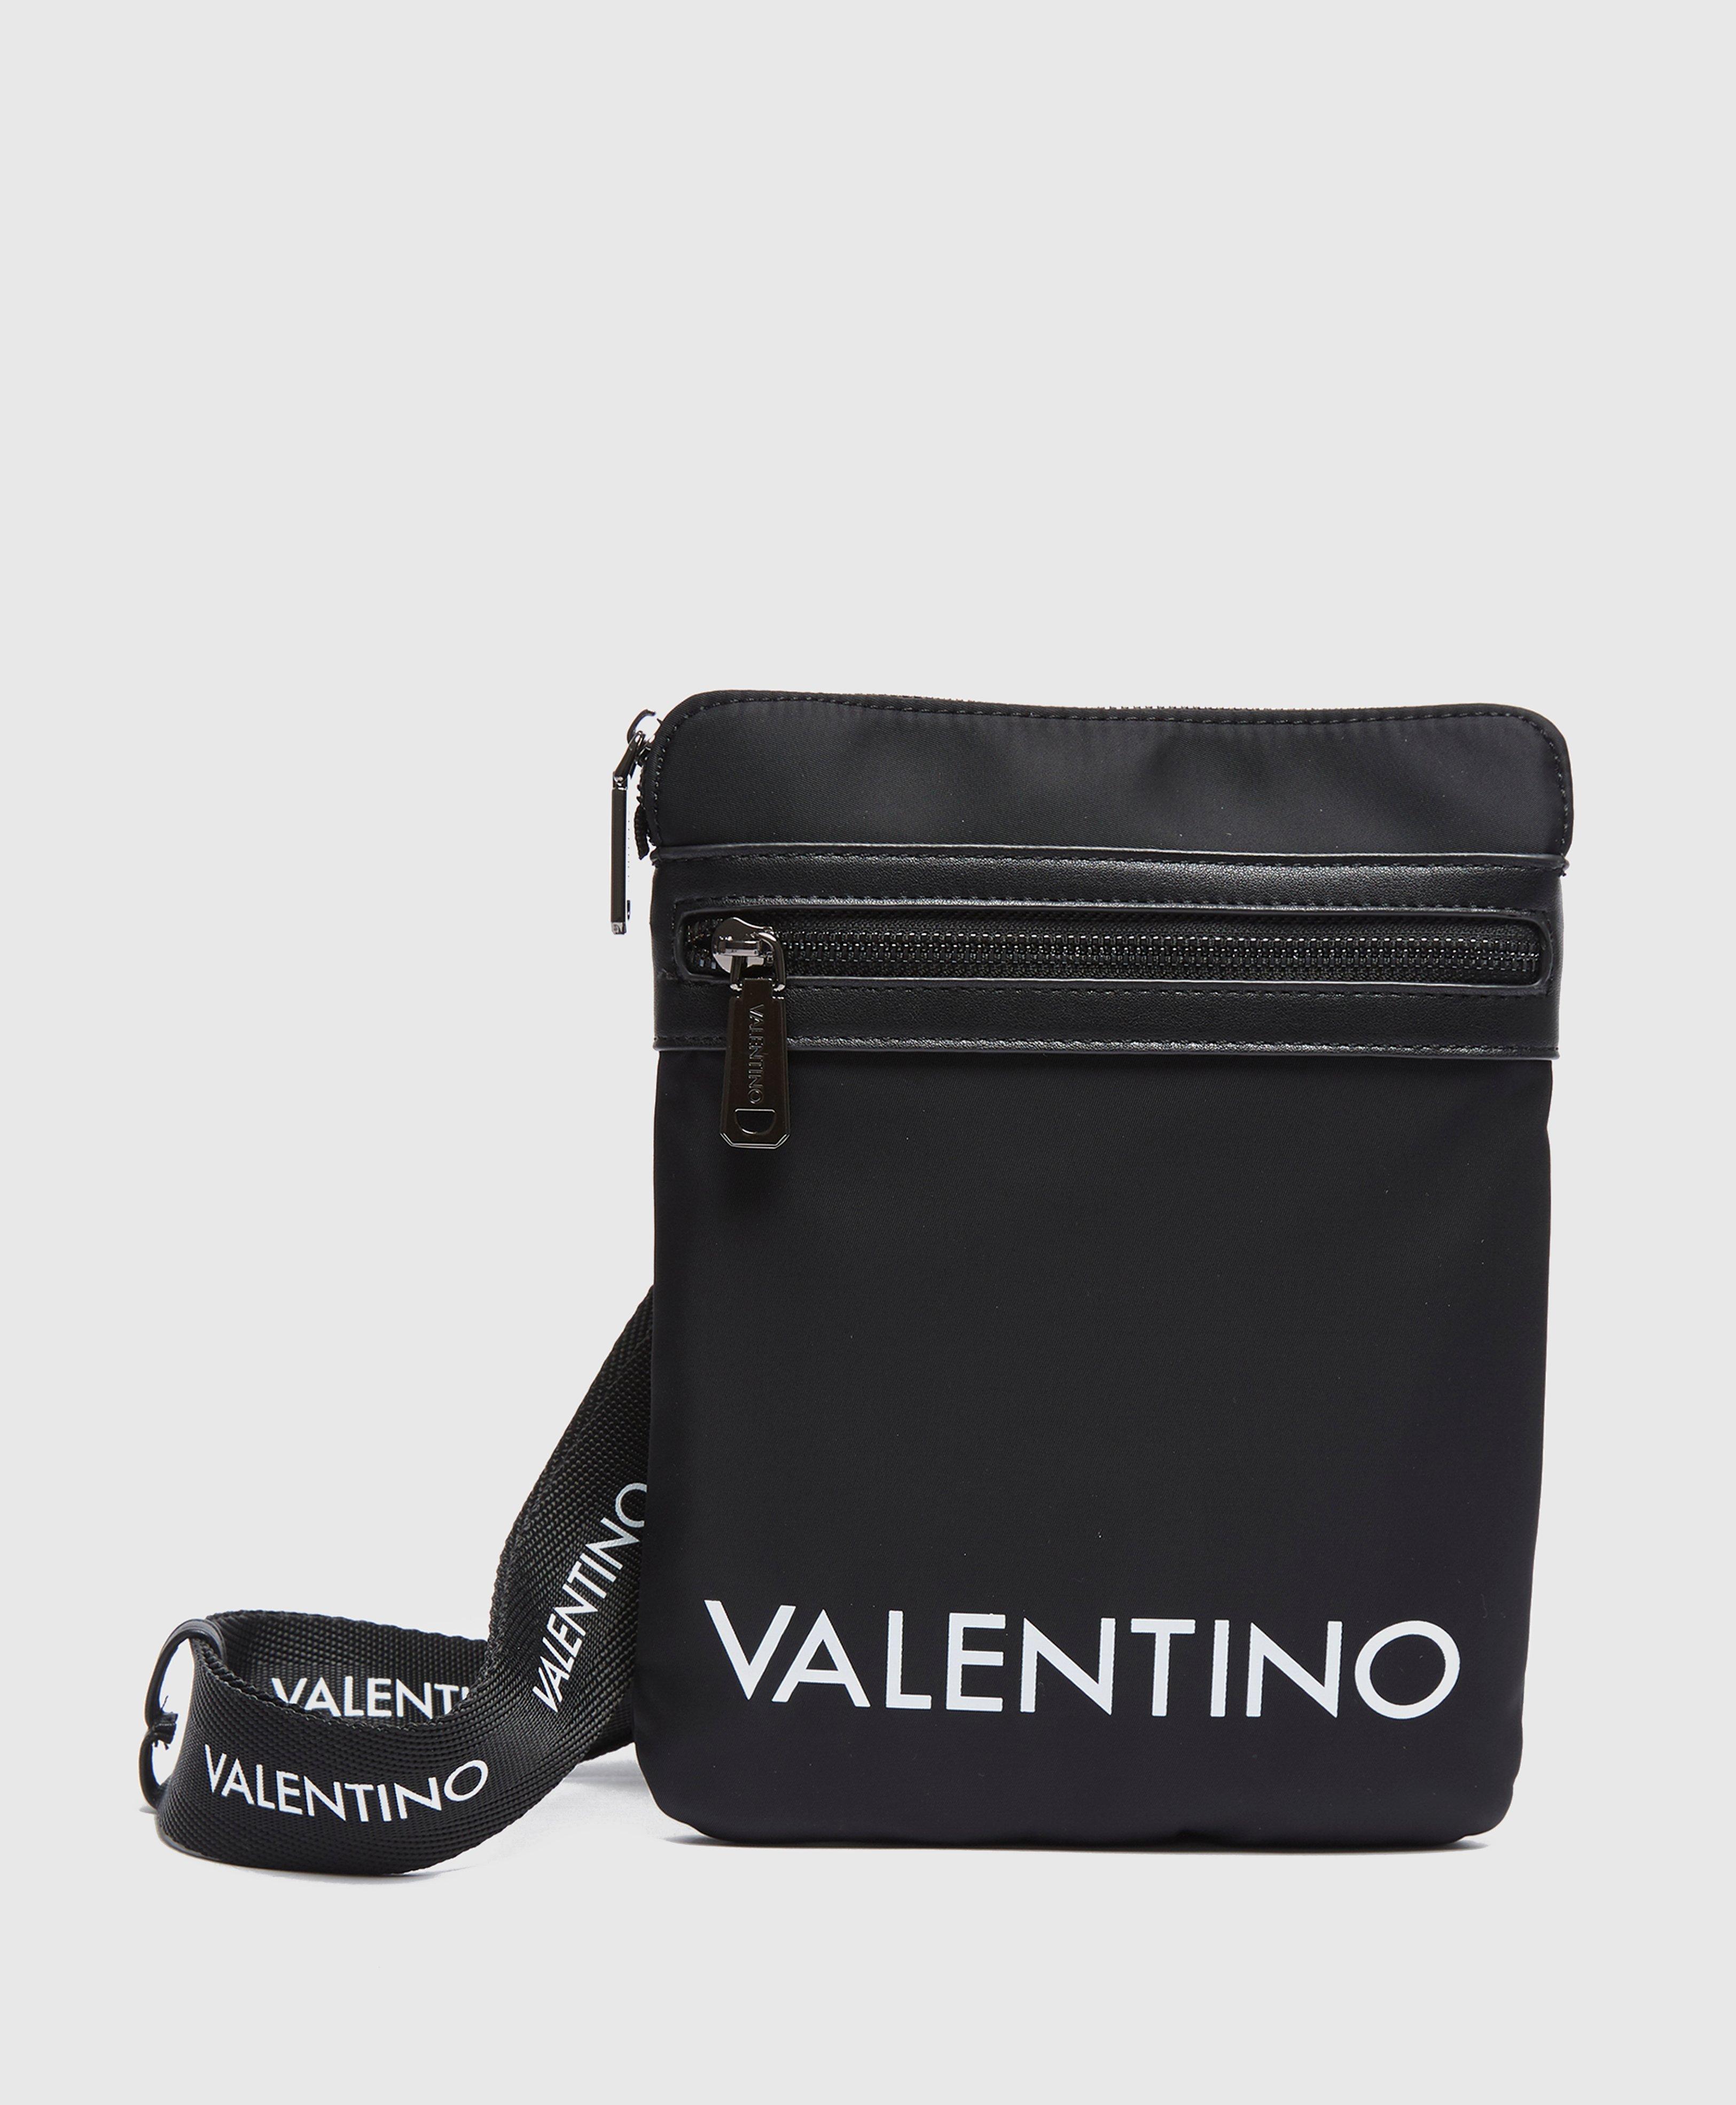 valentino side bag